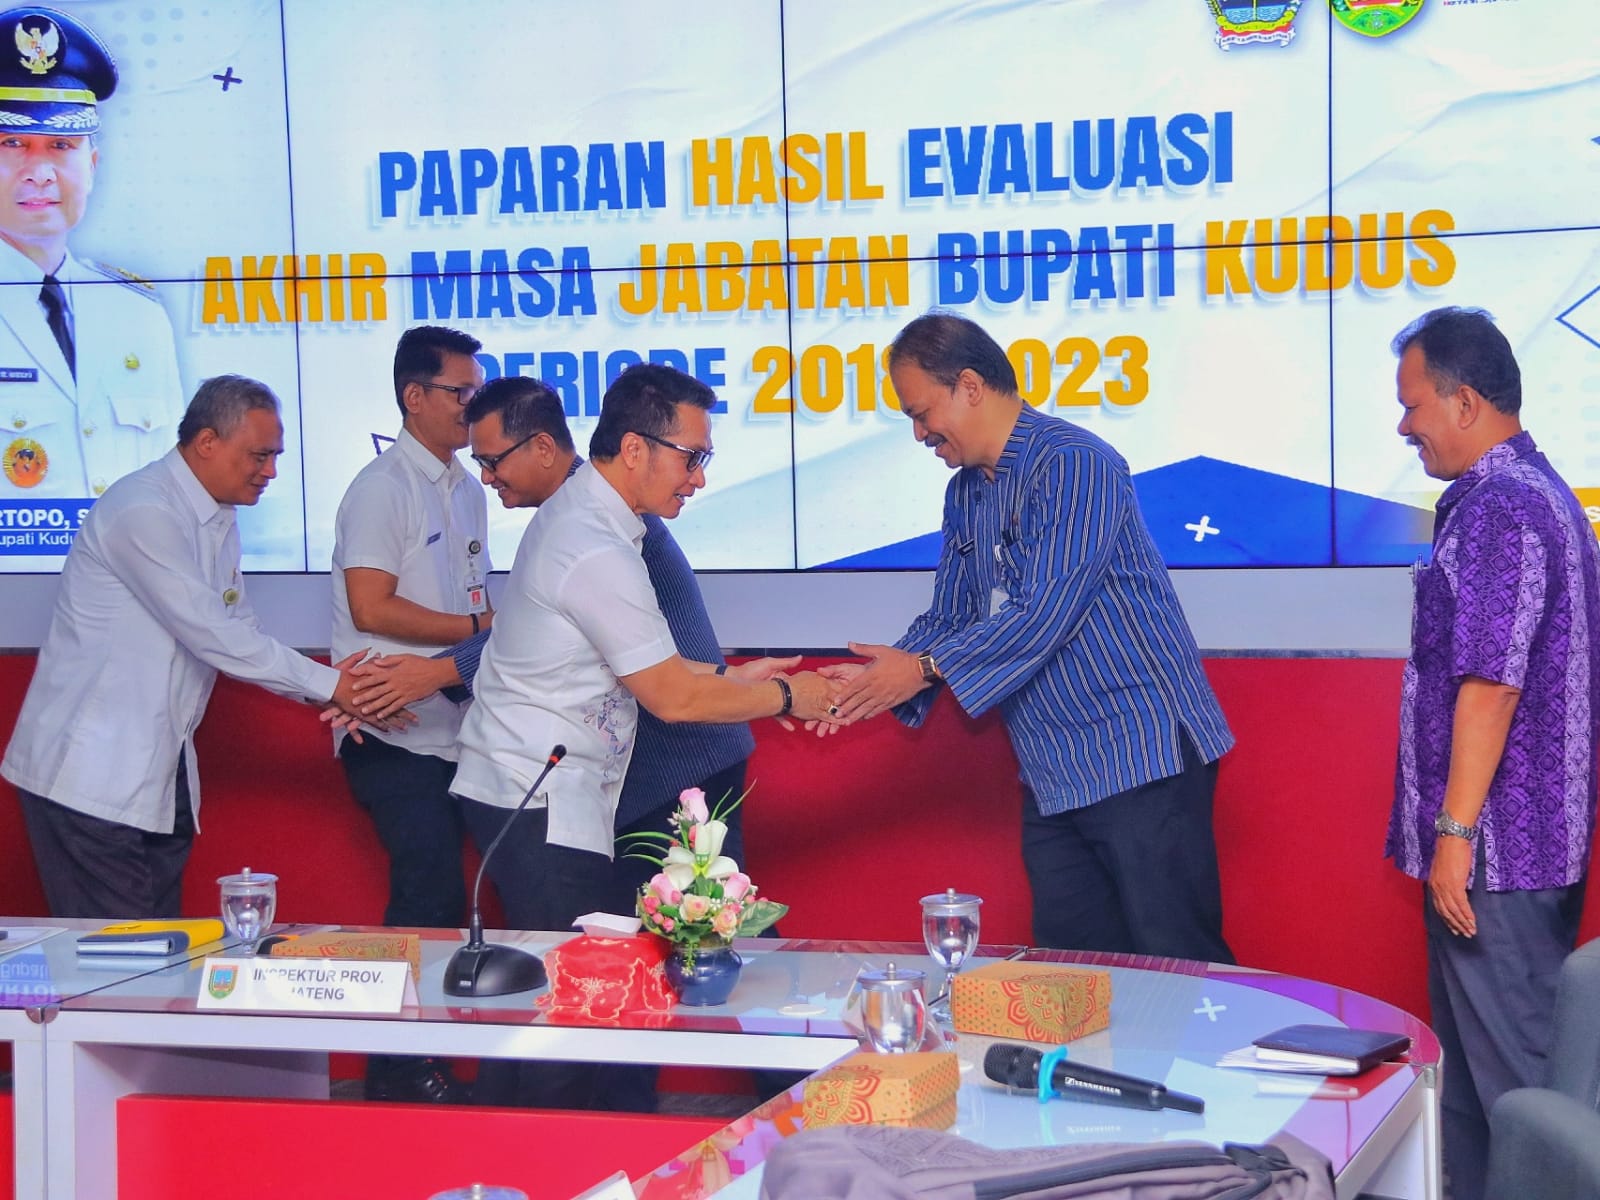 Evaluasi AMJ Bupati Kudus, Kinerja Hartopo Dinilai 'Sangat Baik' Oleh Inspektorat Provinsi Jawa Tengah